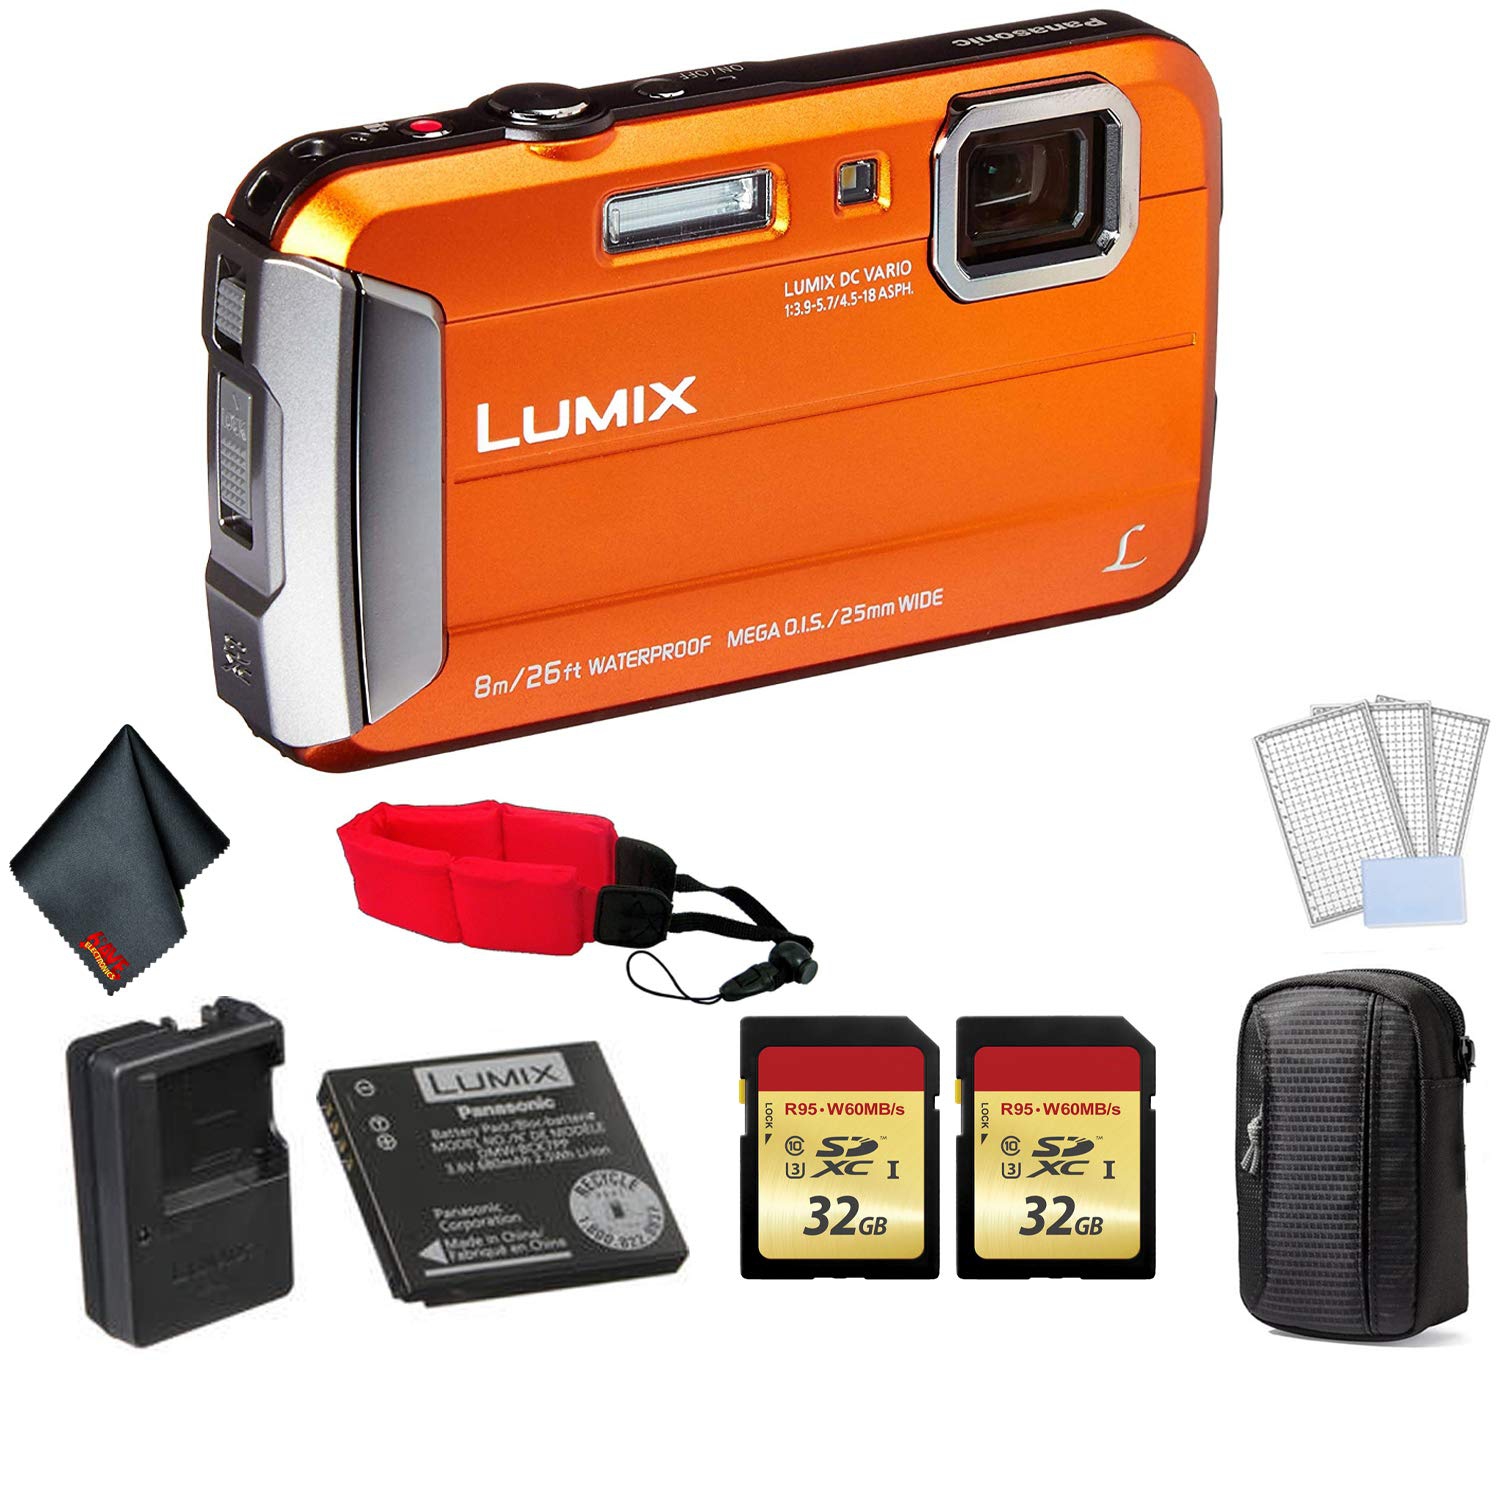 Panasonic Lumix DMC-TS30 Waterproof Digital Camera (Orange) - Bundle with 32GB Memory Card + Floating Wrist Strap + LCD